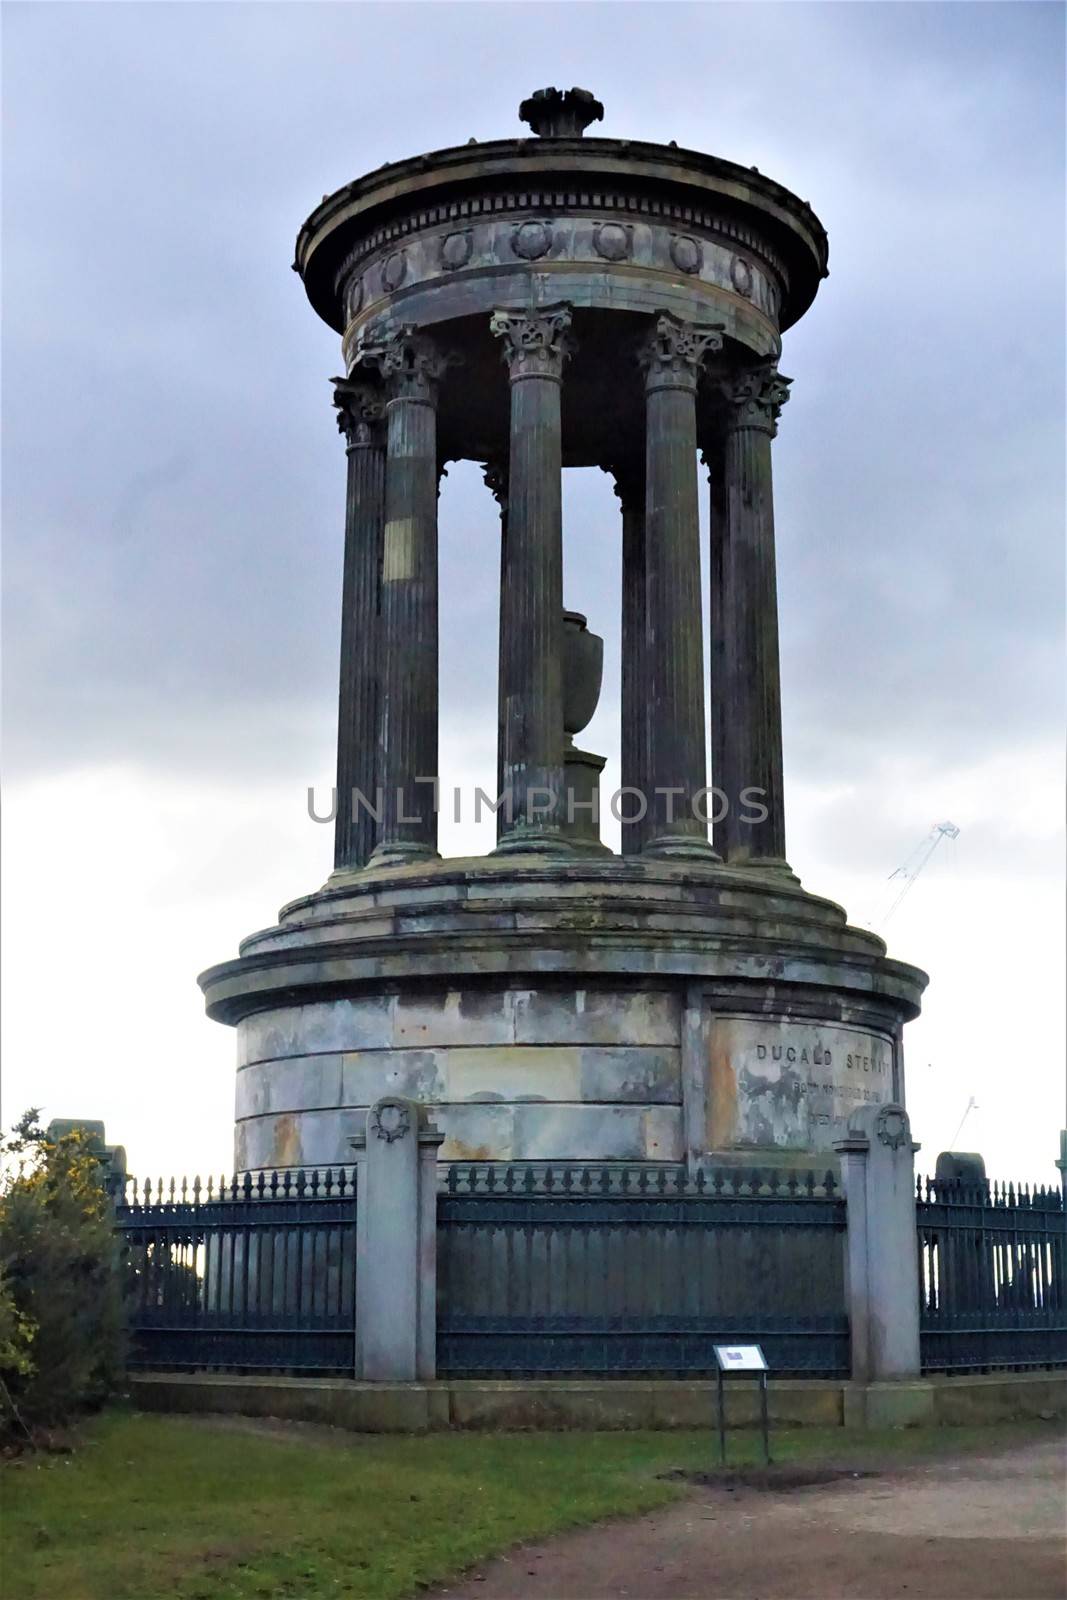 Dugald Stewart Monument on Calton Hill, Edinburgh by pisces2386